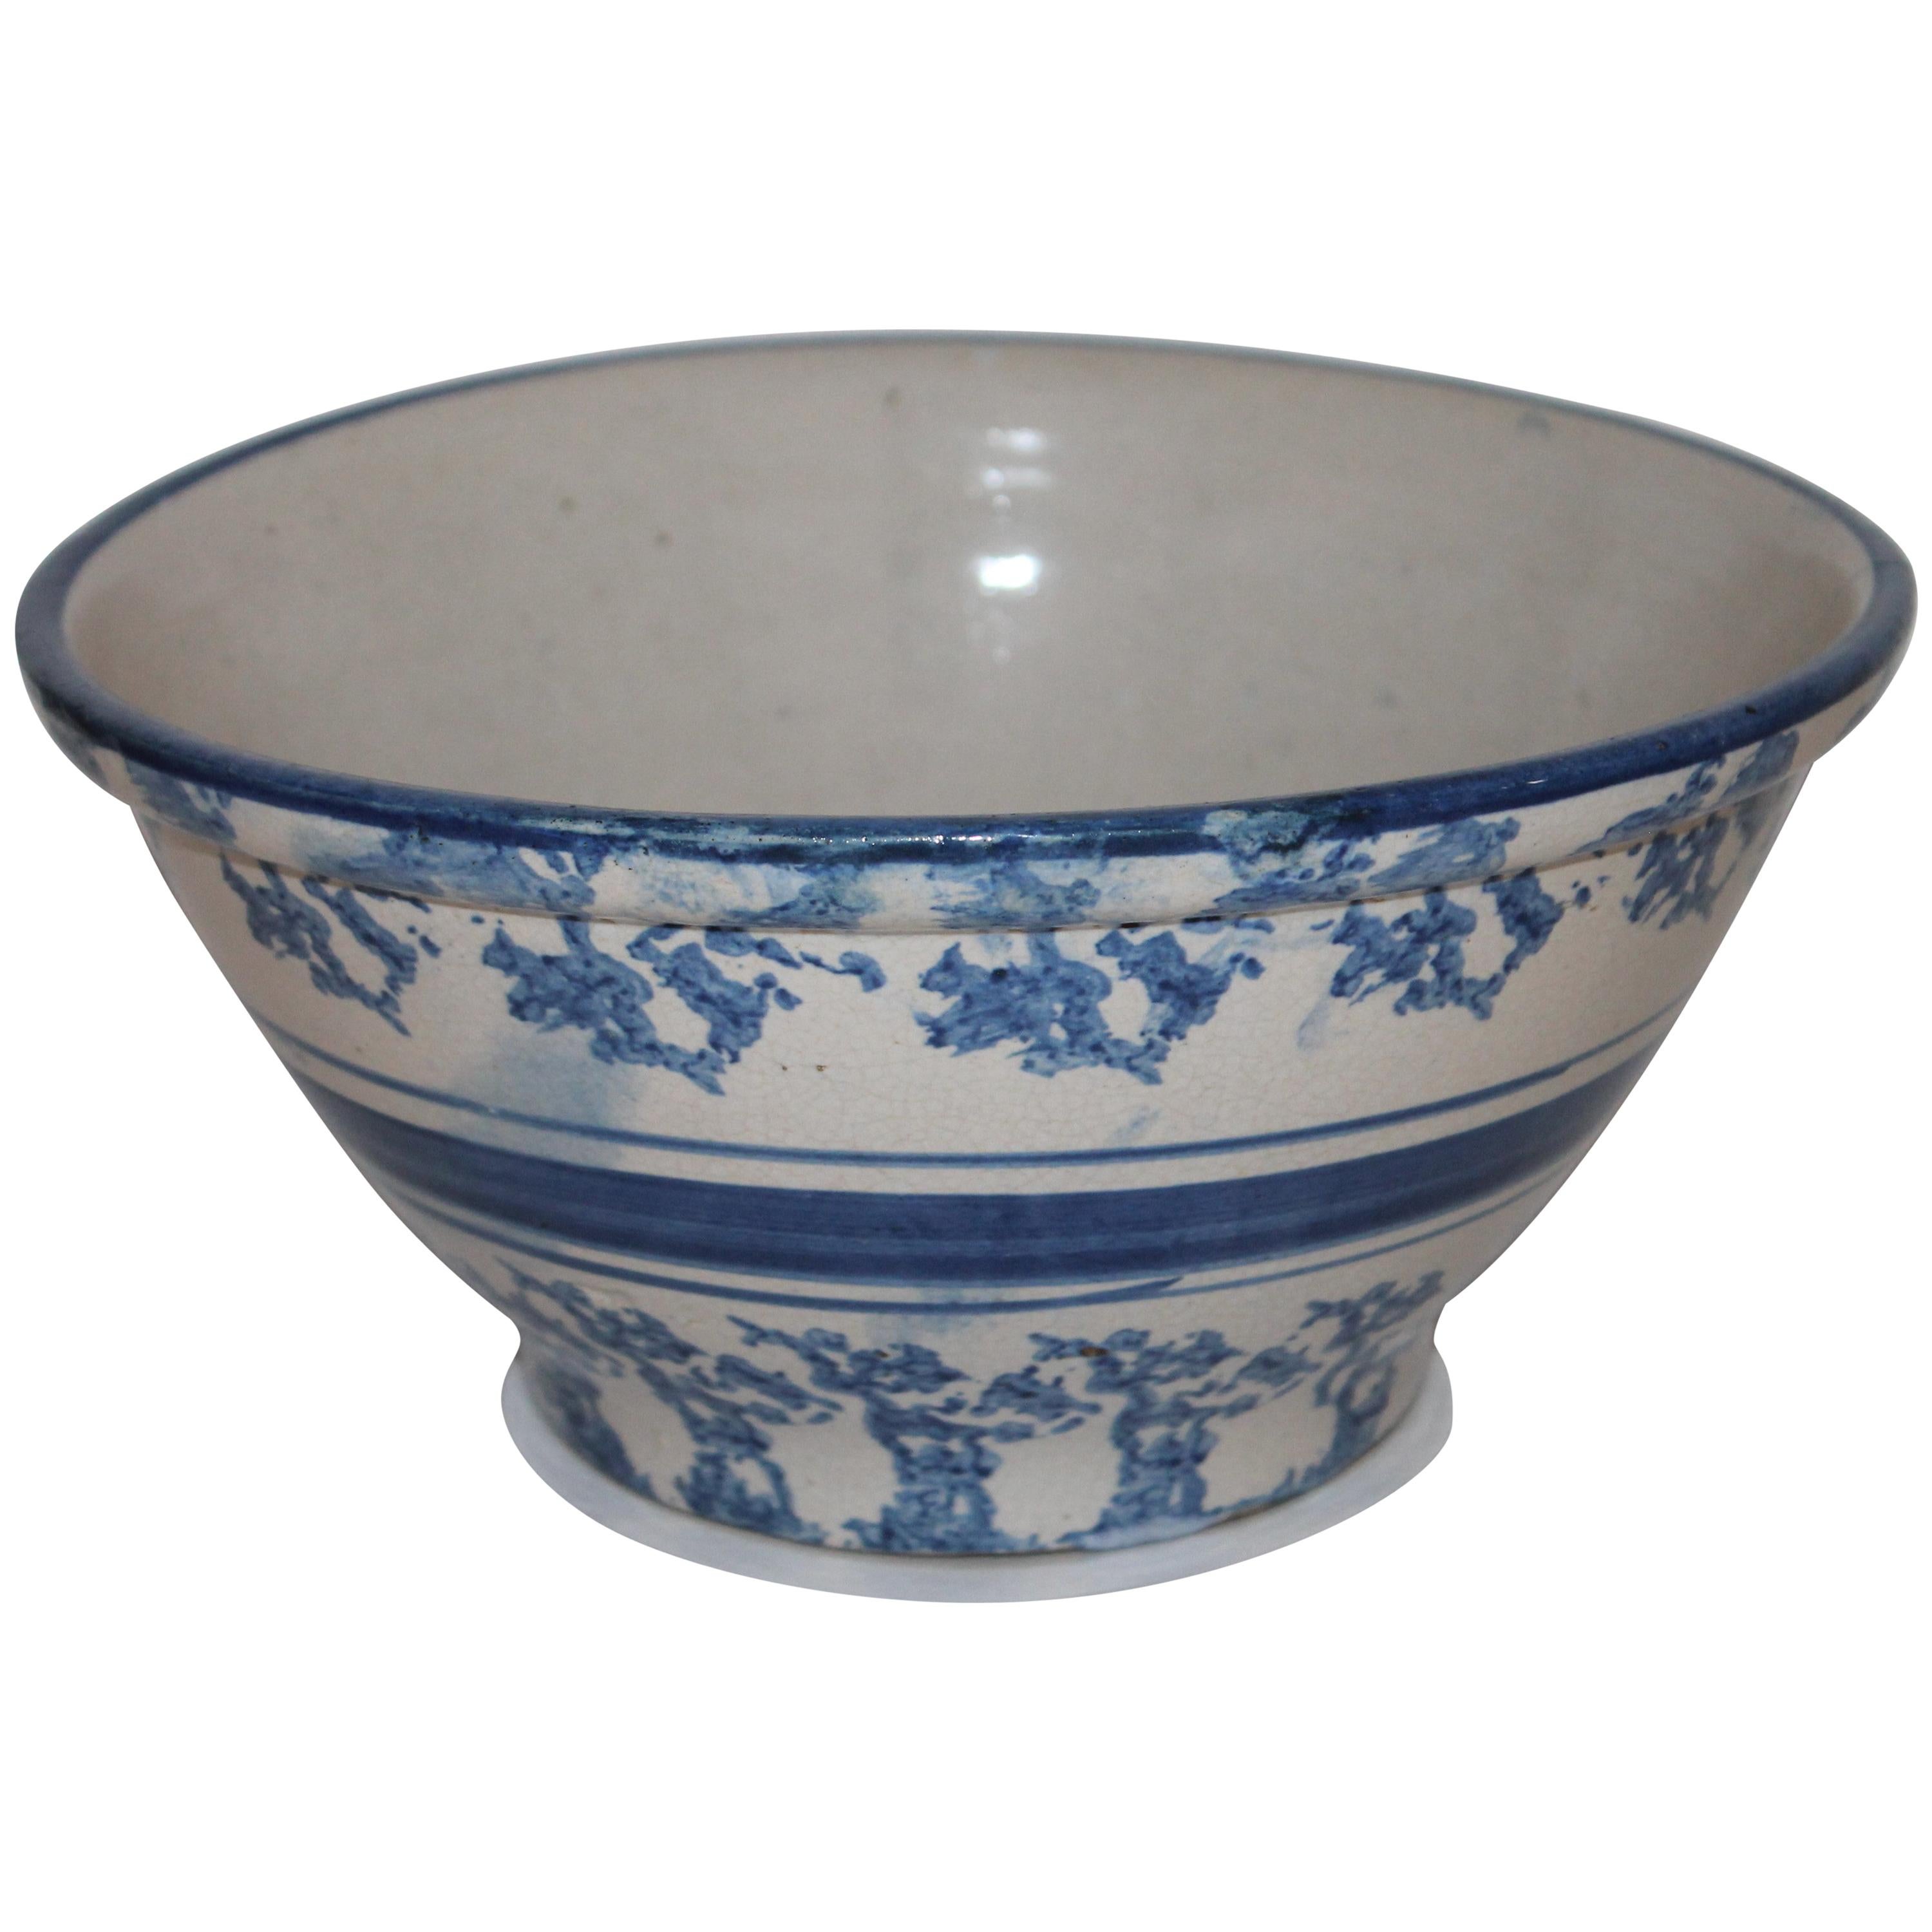 Schale aus Spongeware-Keramik, 19. Jahrhundert